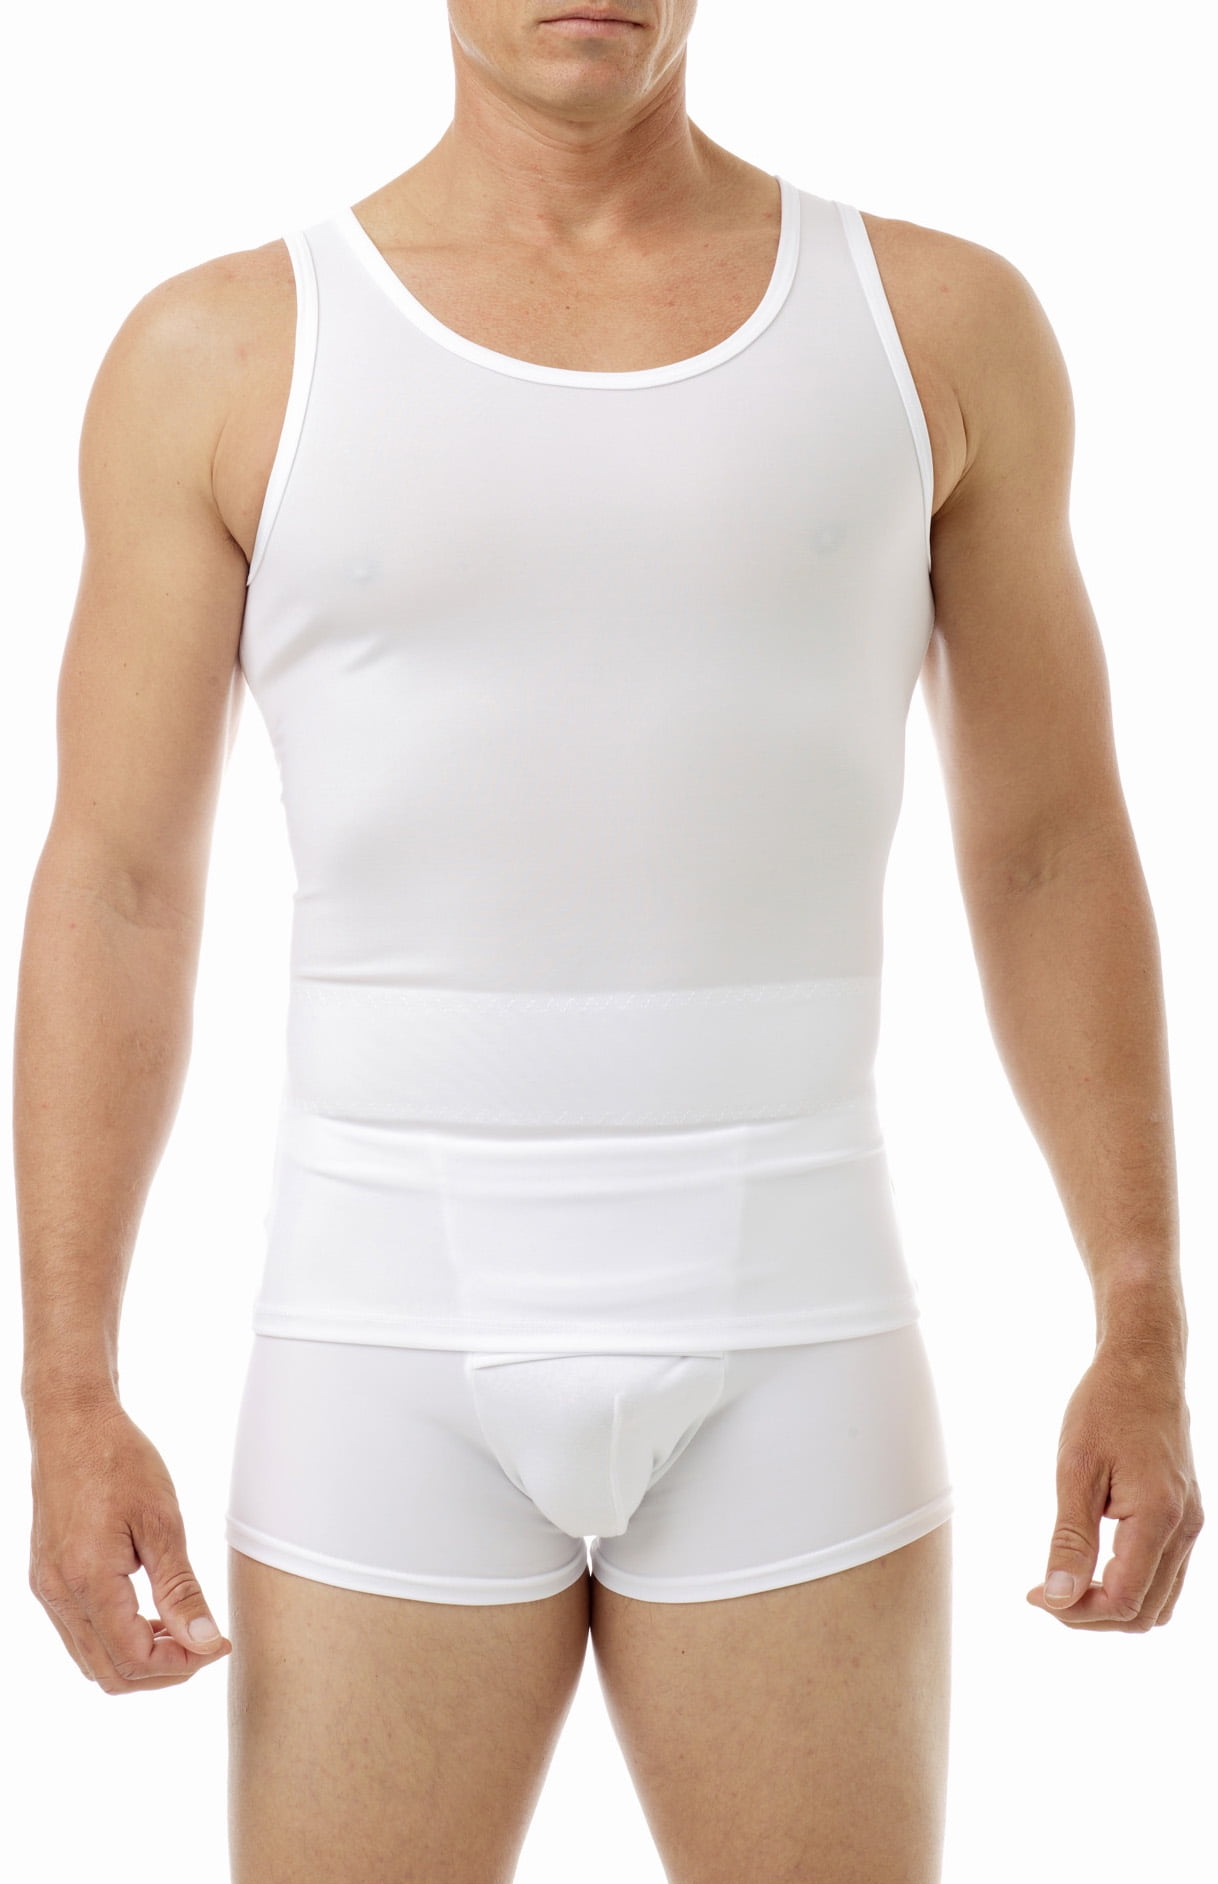 Men's Compression Posture Corrector Ultra Lift Vest Slimming Shirt Body Shaper 